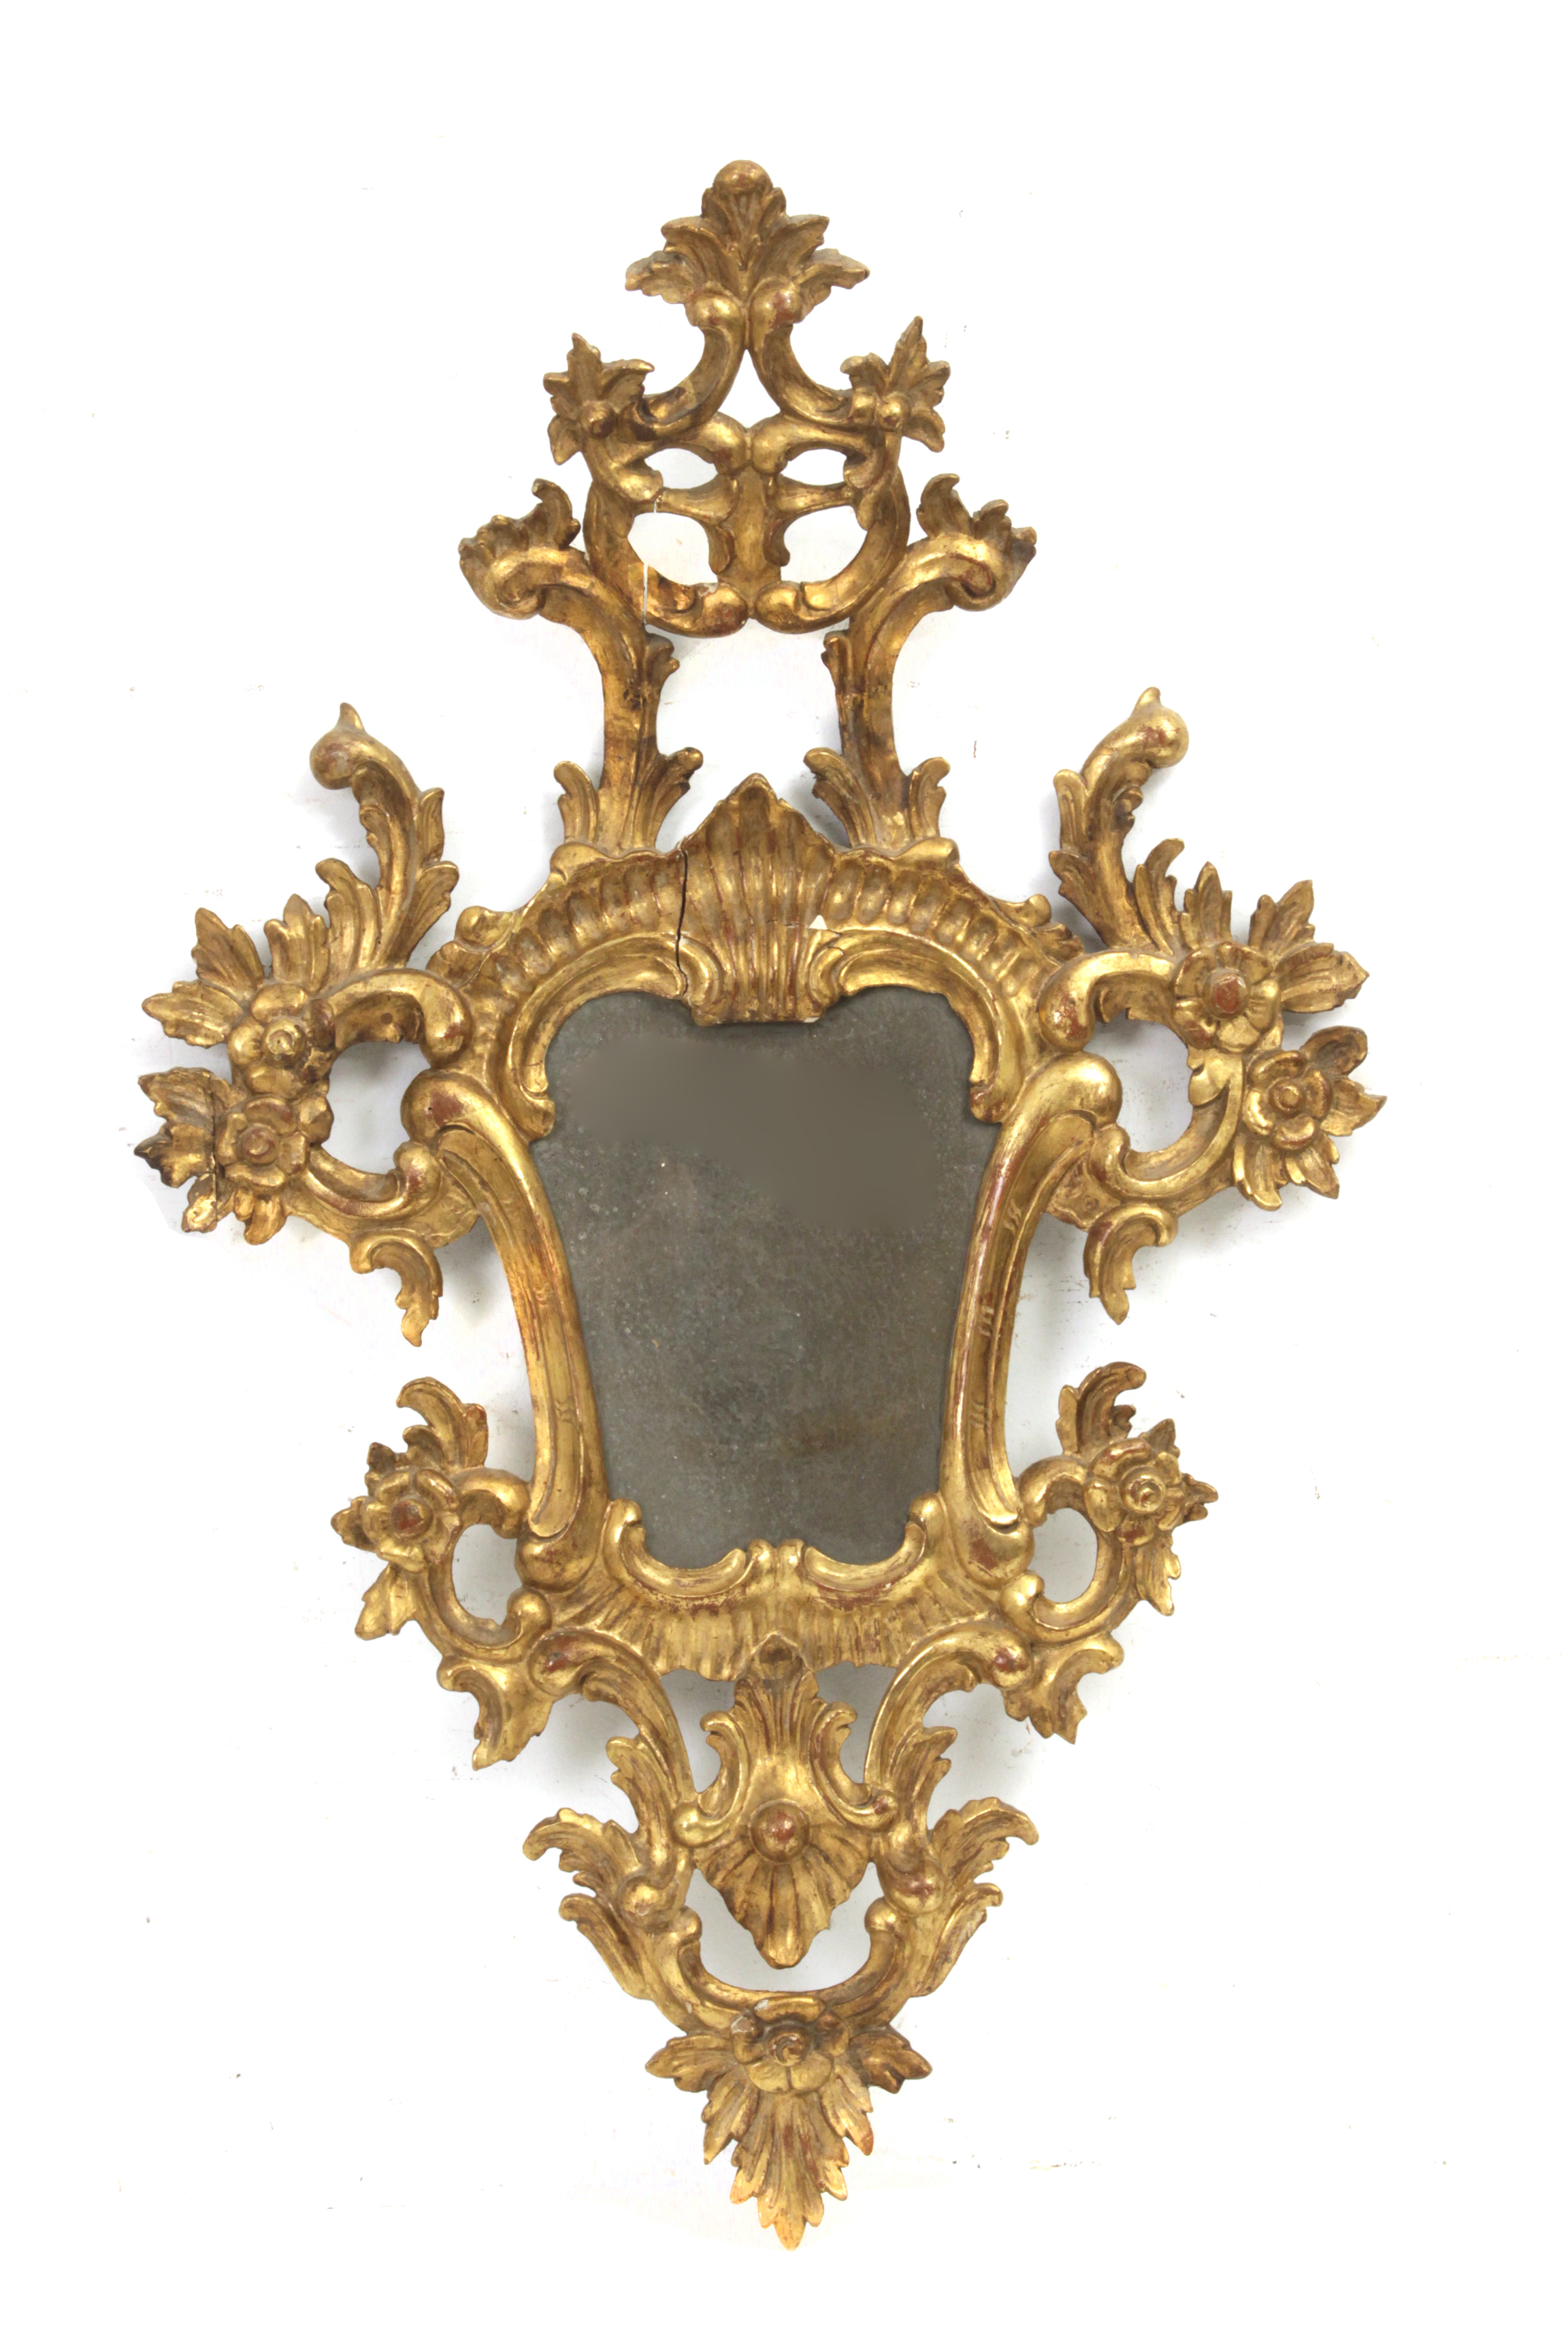 A first half of 20th century cornucopia mirror